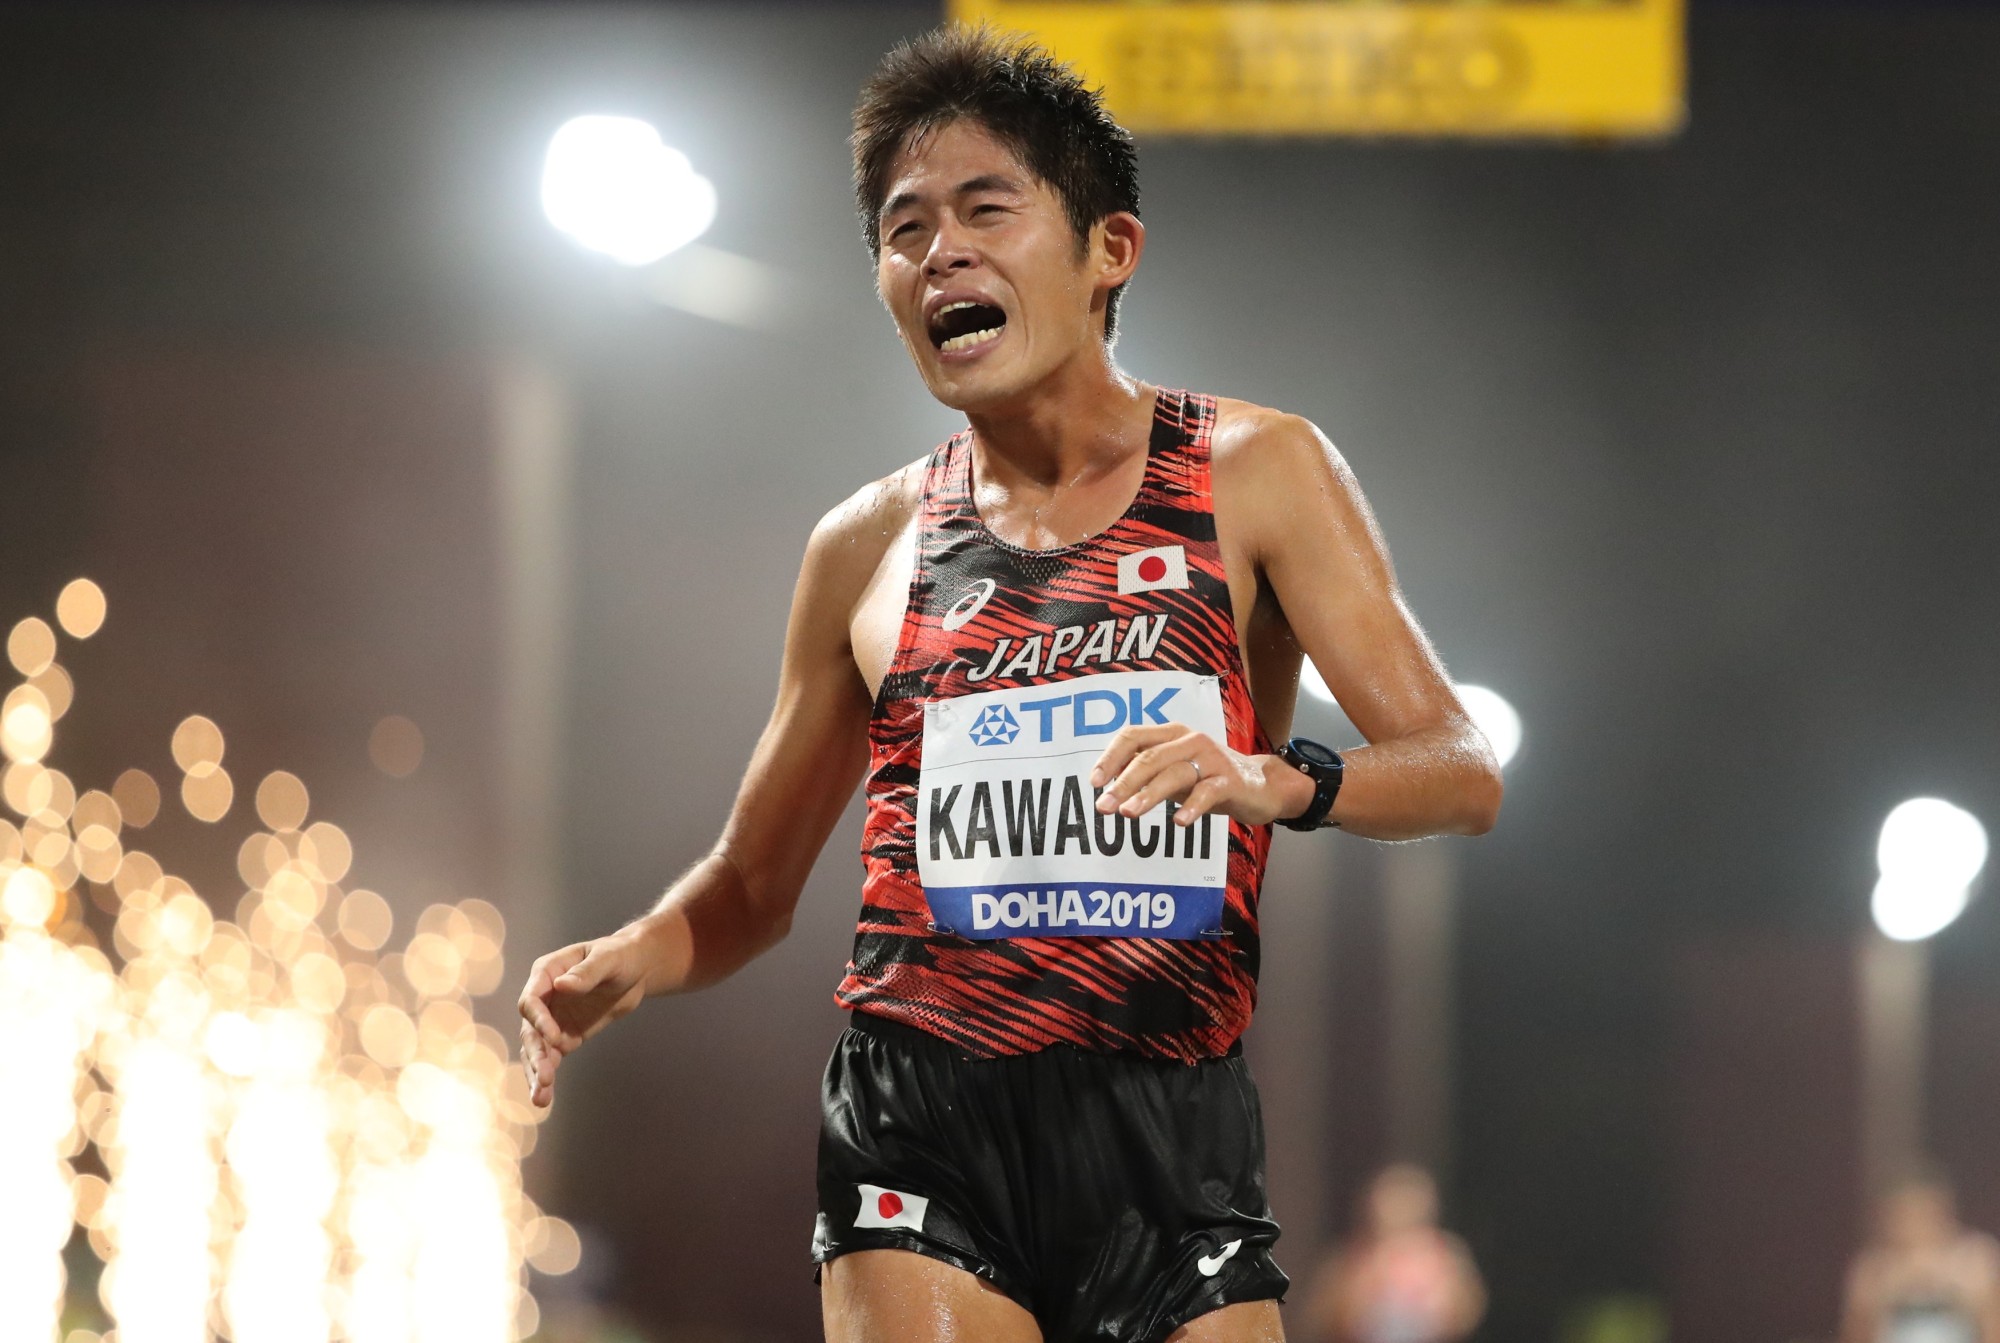 Yuki Kawauchi crosses the finish line in the men's marathon at the IAAF World Athletics Championships in Doha on Oct. 6. | REUTERS